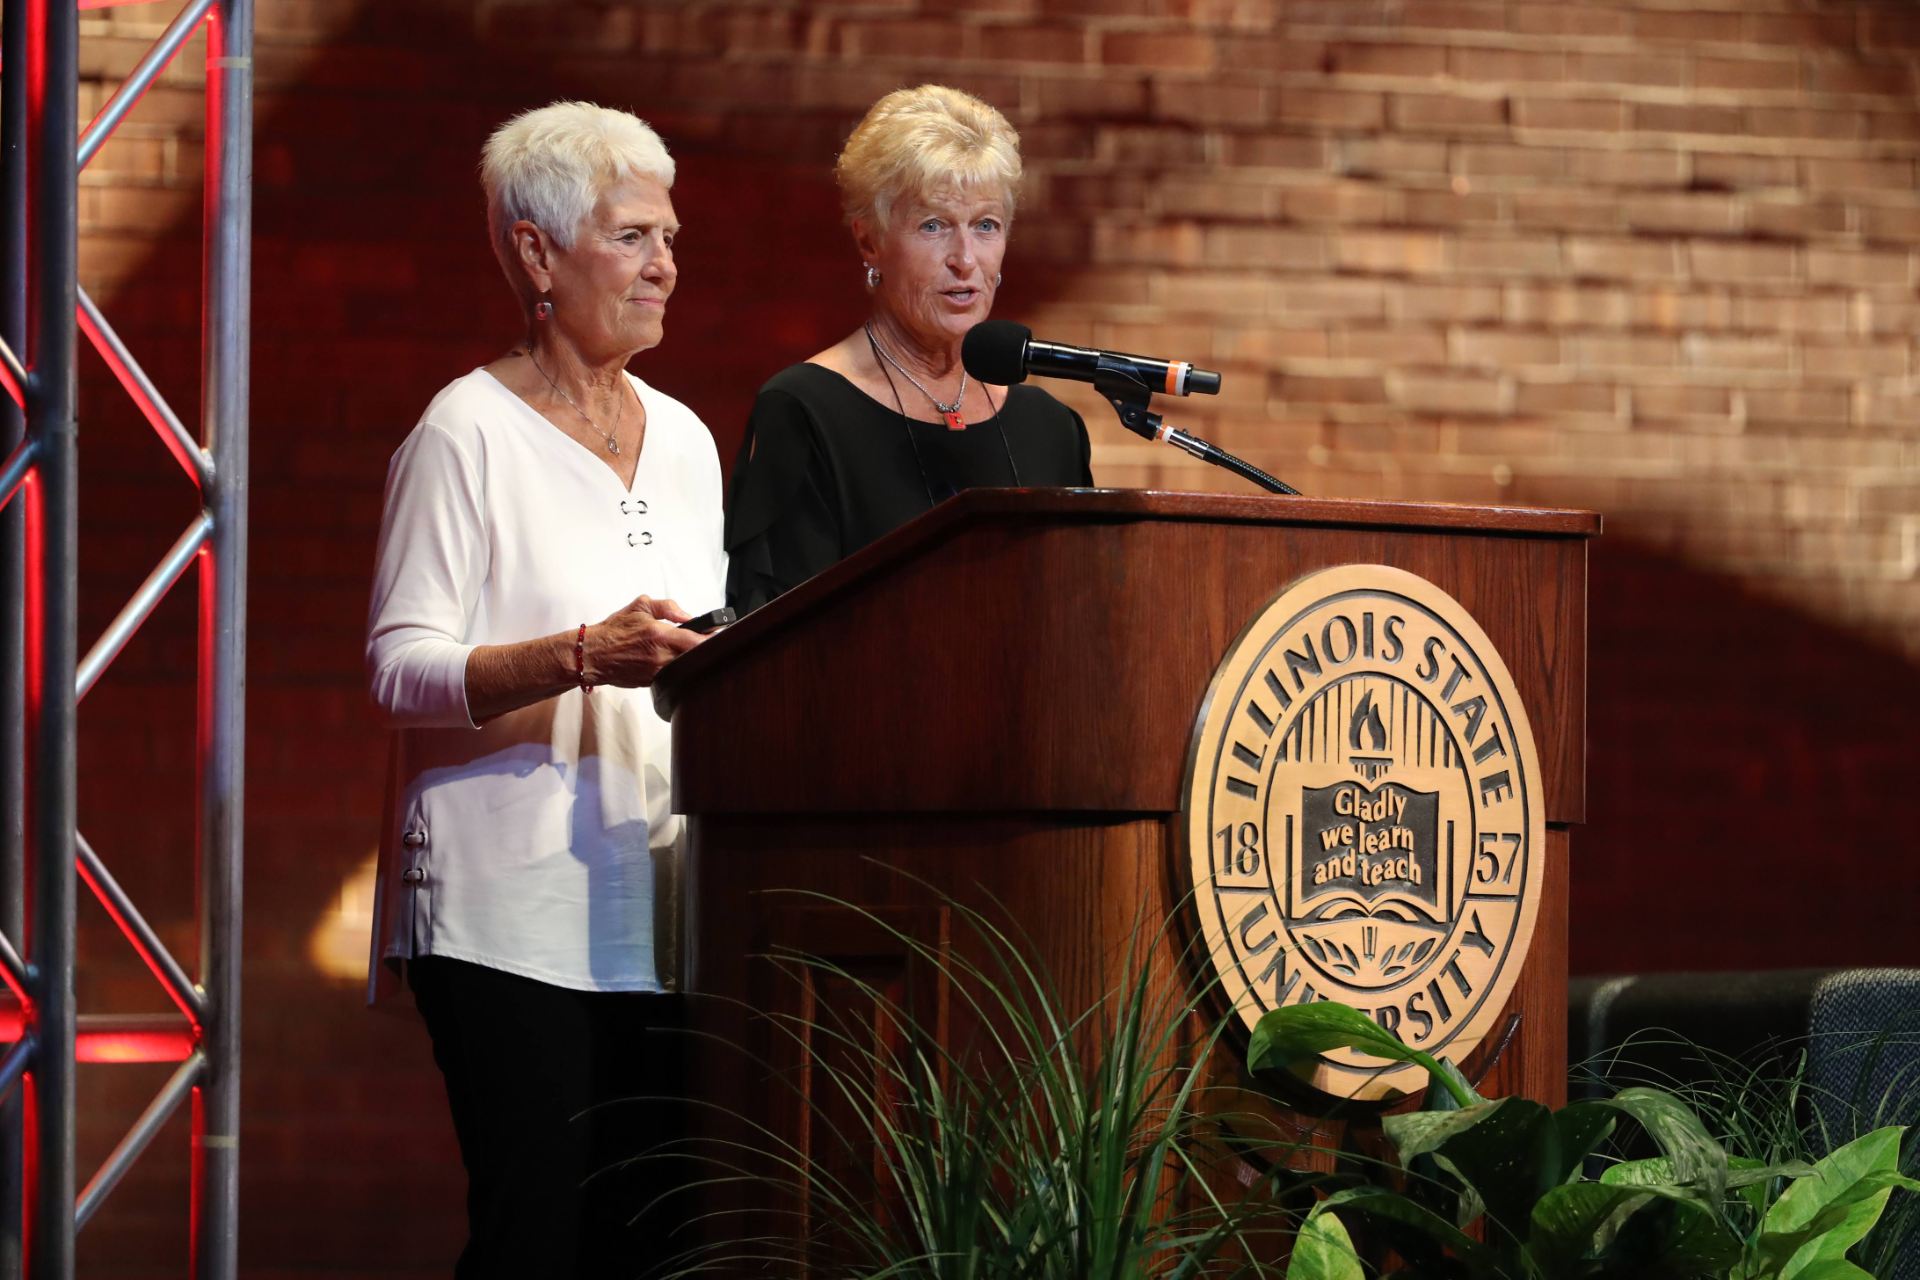 Two women talking on a podium.